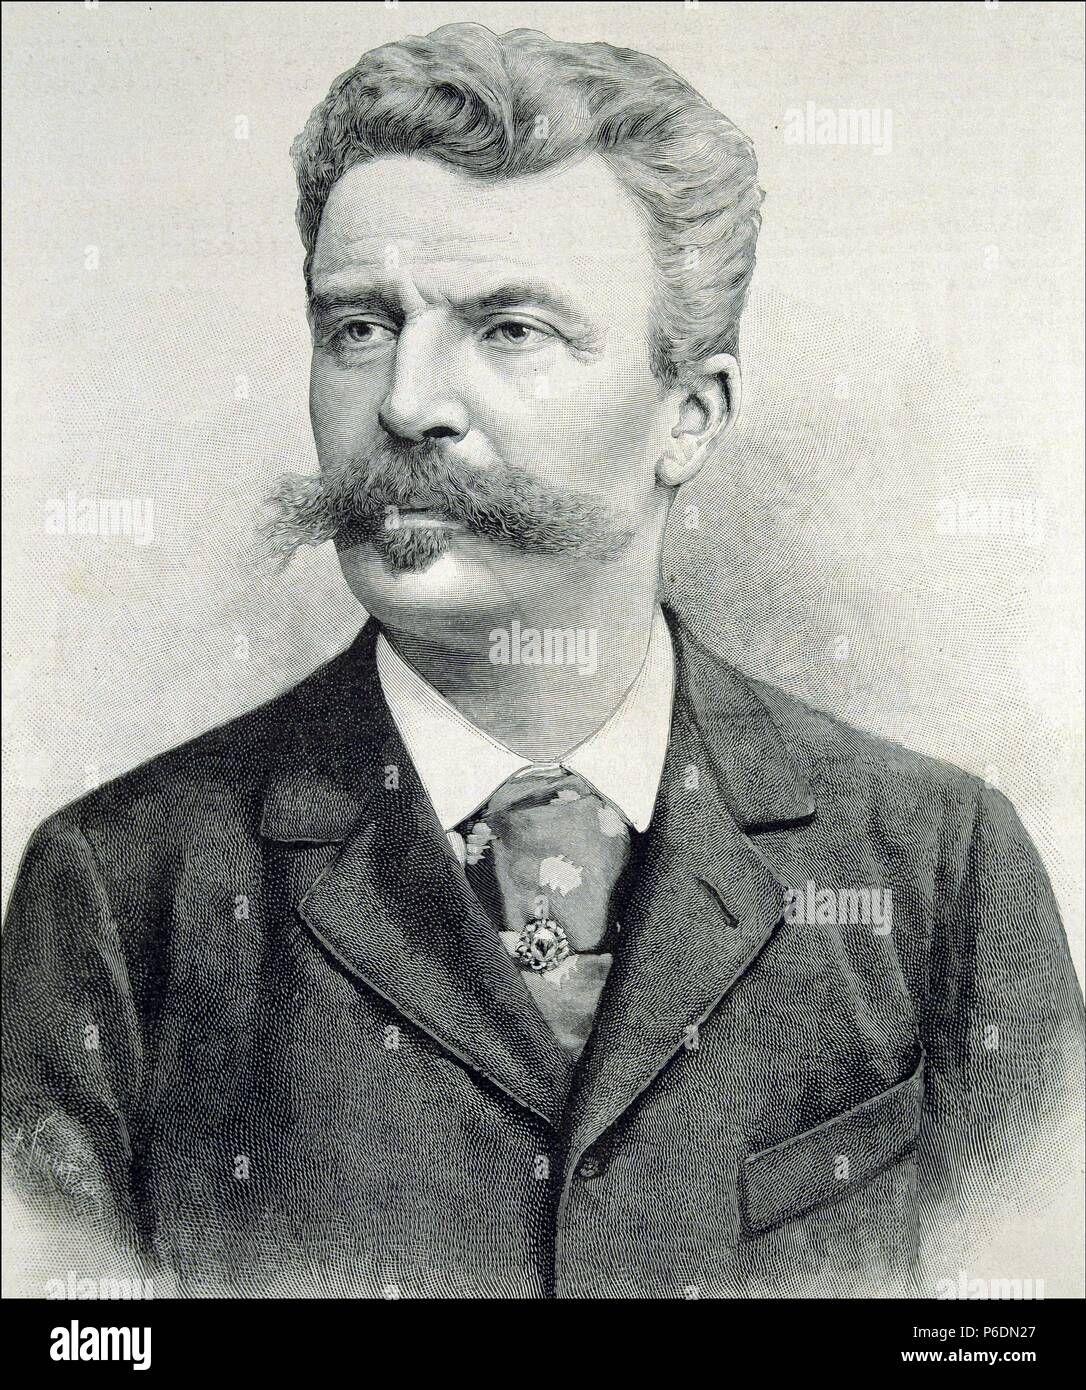 MAUPASSANT, GUY DE. ESCRITOR FRANCES. 1850 - 1893. GRABADO DE L'Illustration, AÑO 1893. Stockfoto